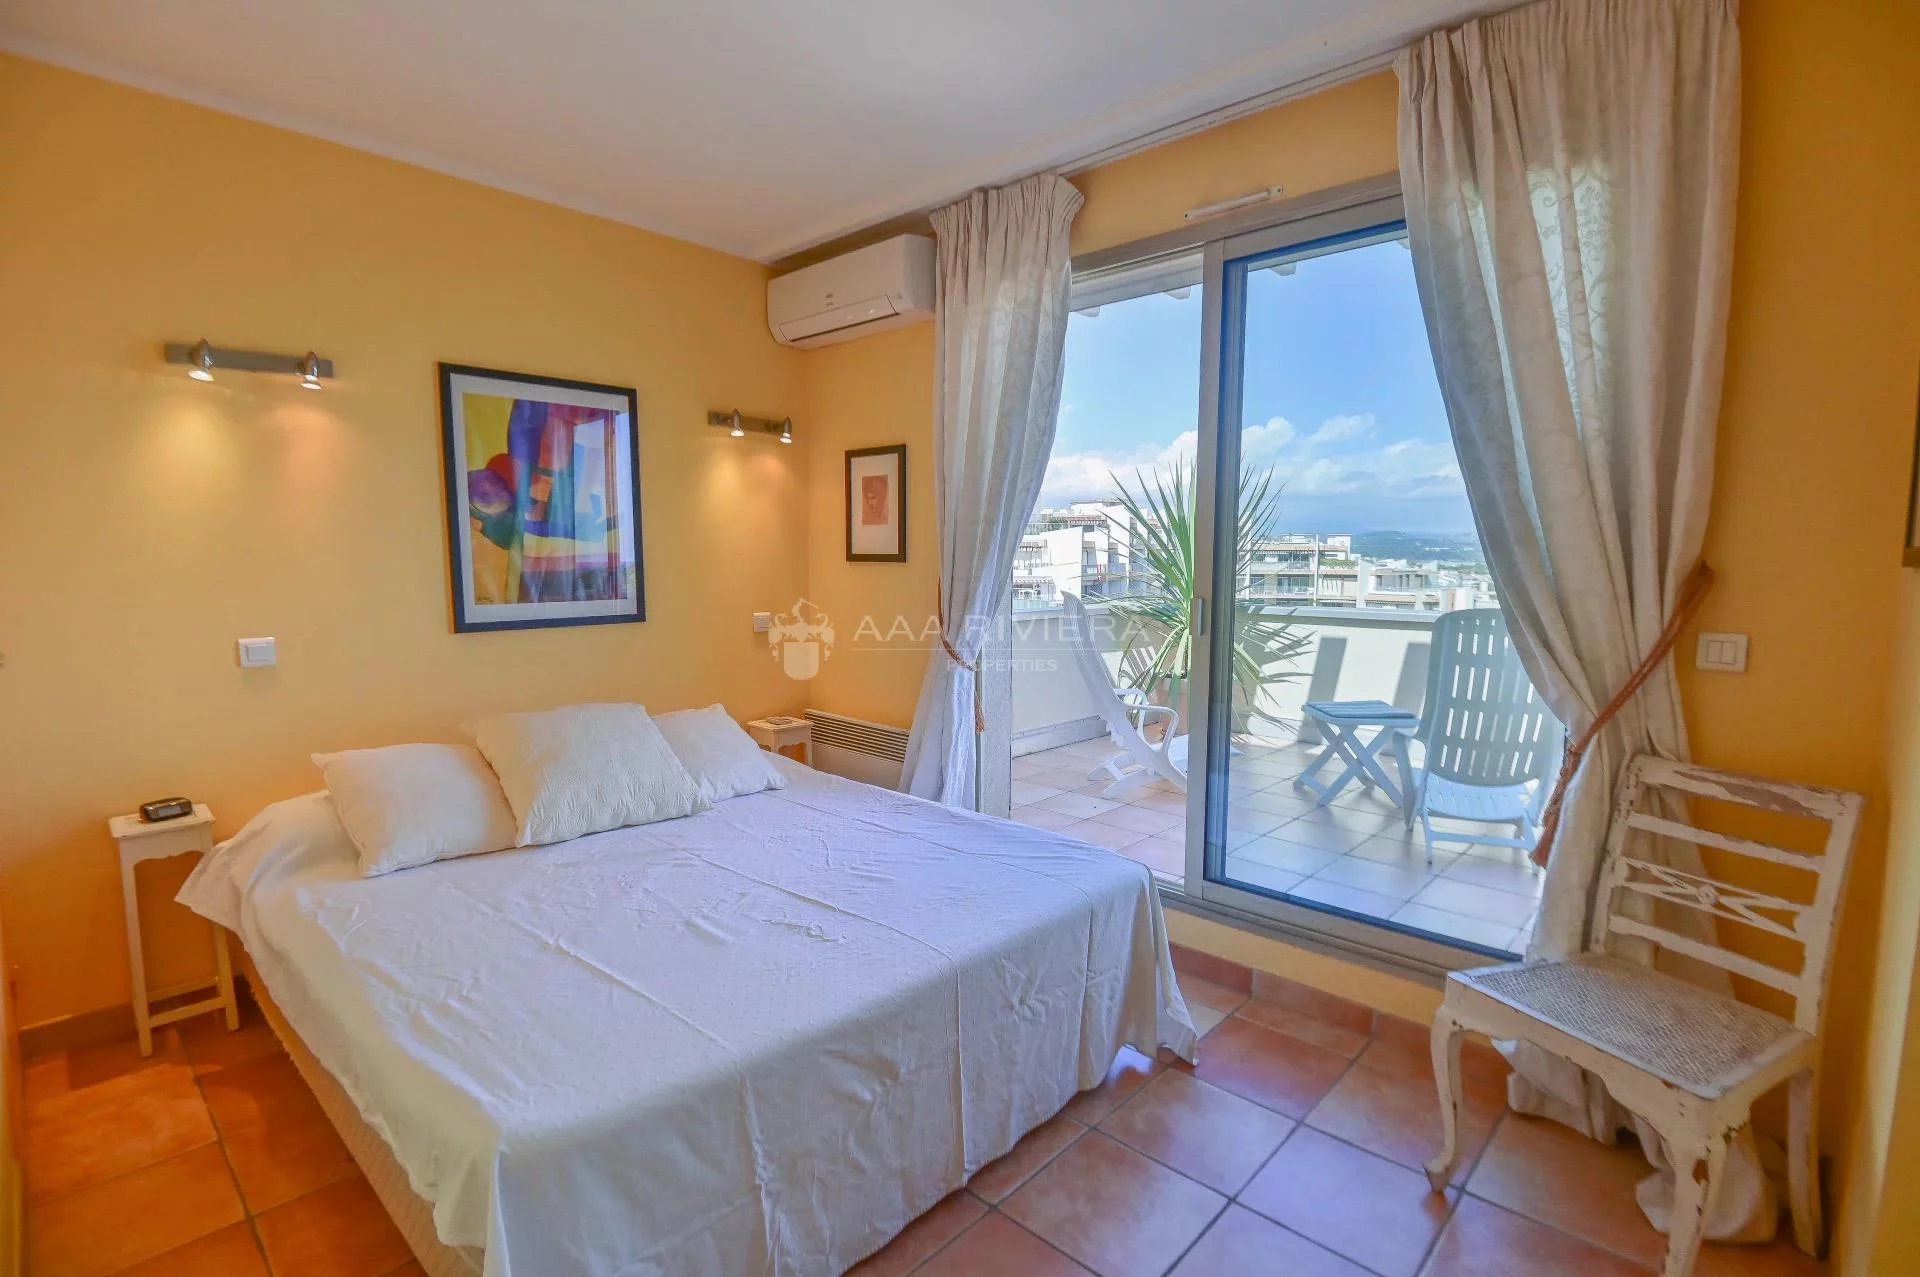 EXLUSIVITE - Mandelieu - Dernier étage, bel appartement 3P de 82m² avec terrasses de 62m². Vue mer. Piscine, tennis.